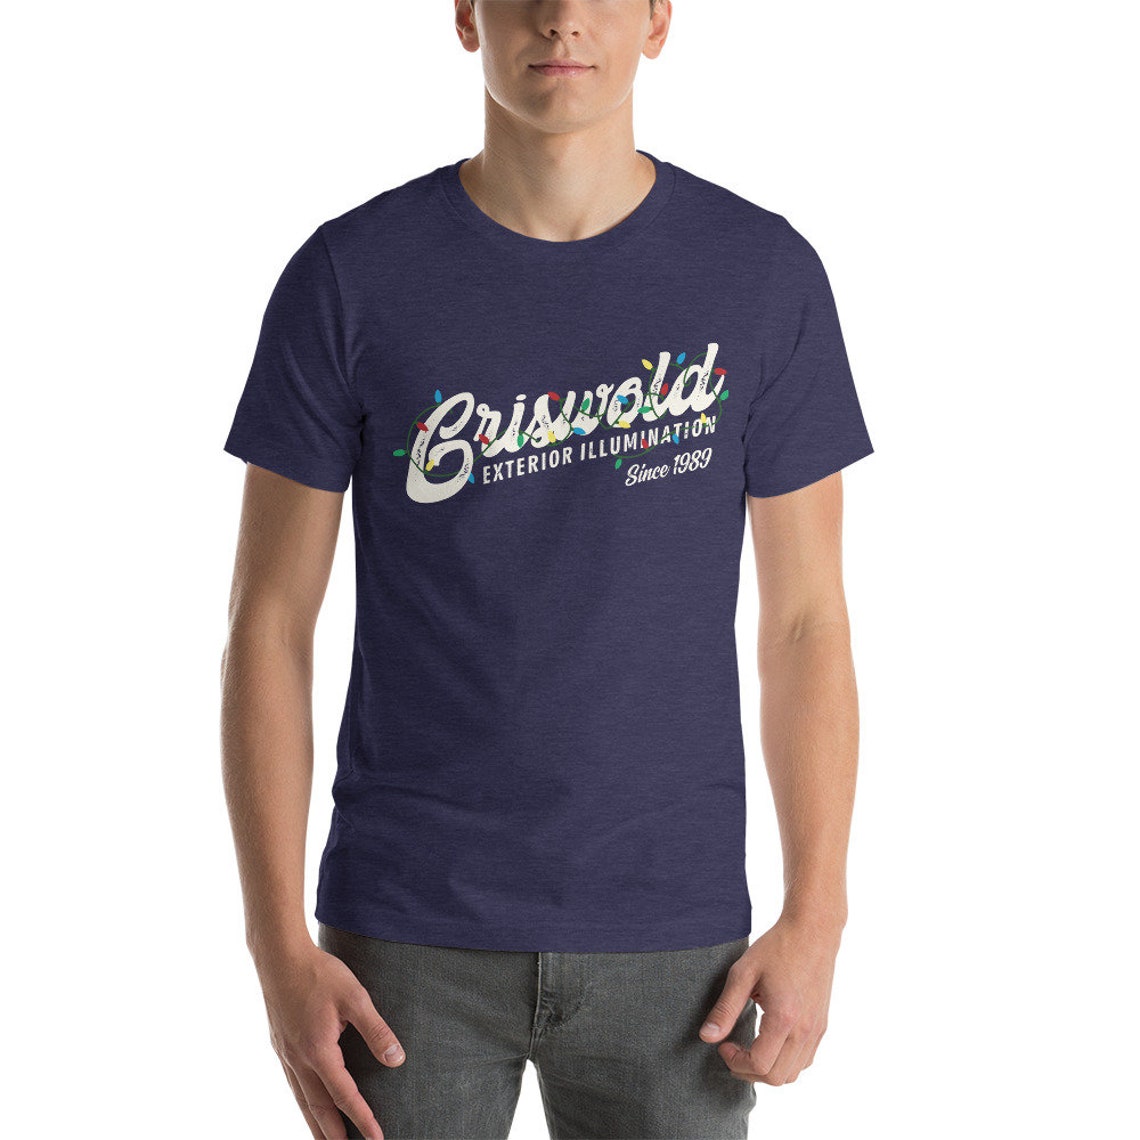 Clark Griswold T Shirt, Christmas Vacation T Shirt, Griswold Illumination Shirt, Funny Holiday Shirt, Xmas T Shirt, Movie T Shirts